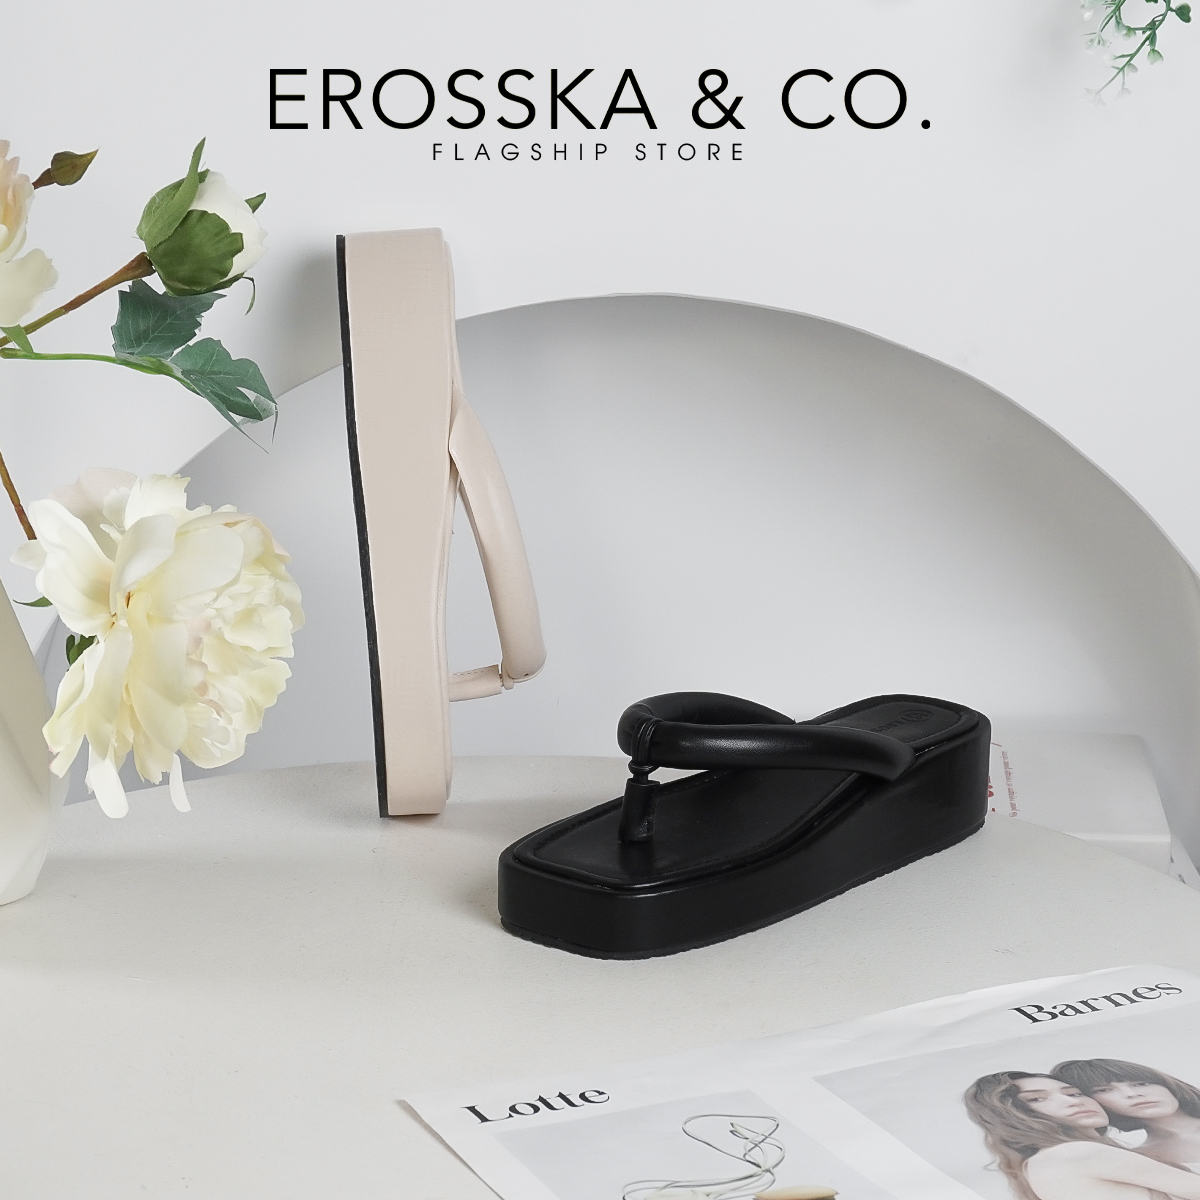 Erosska - Dép kẹp thời trang quai tròn siêu êm - SB019